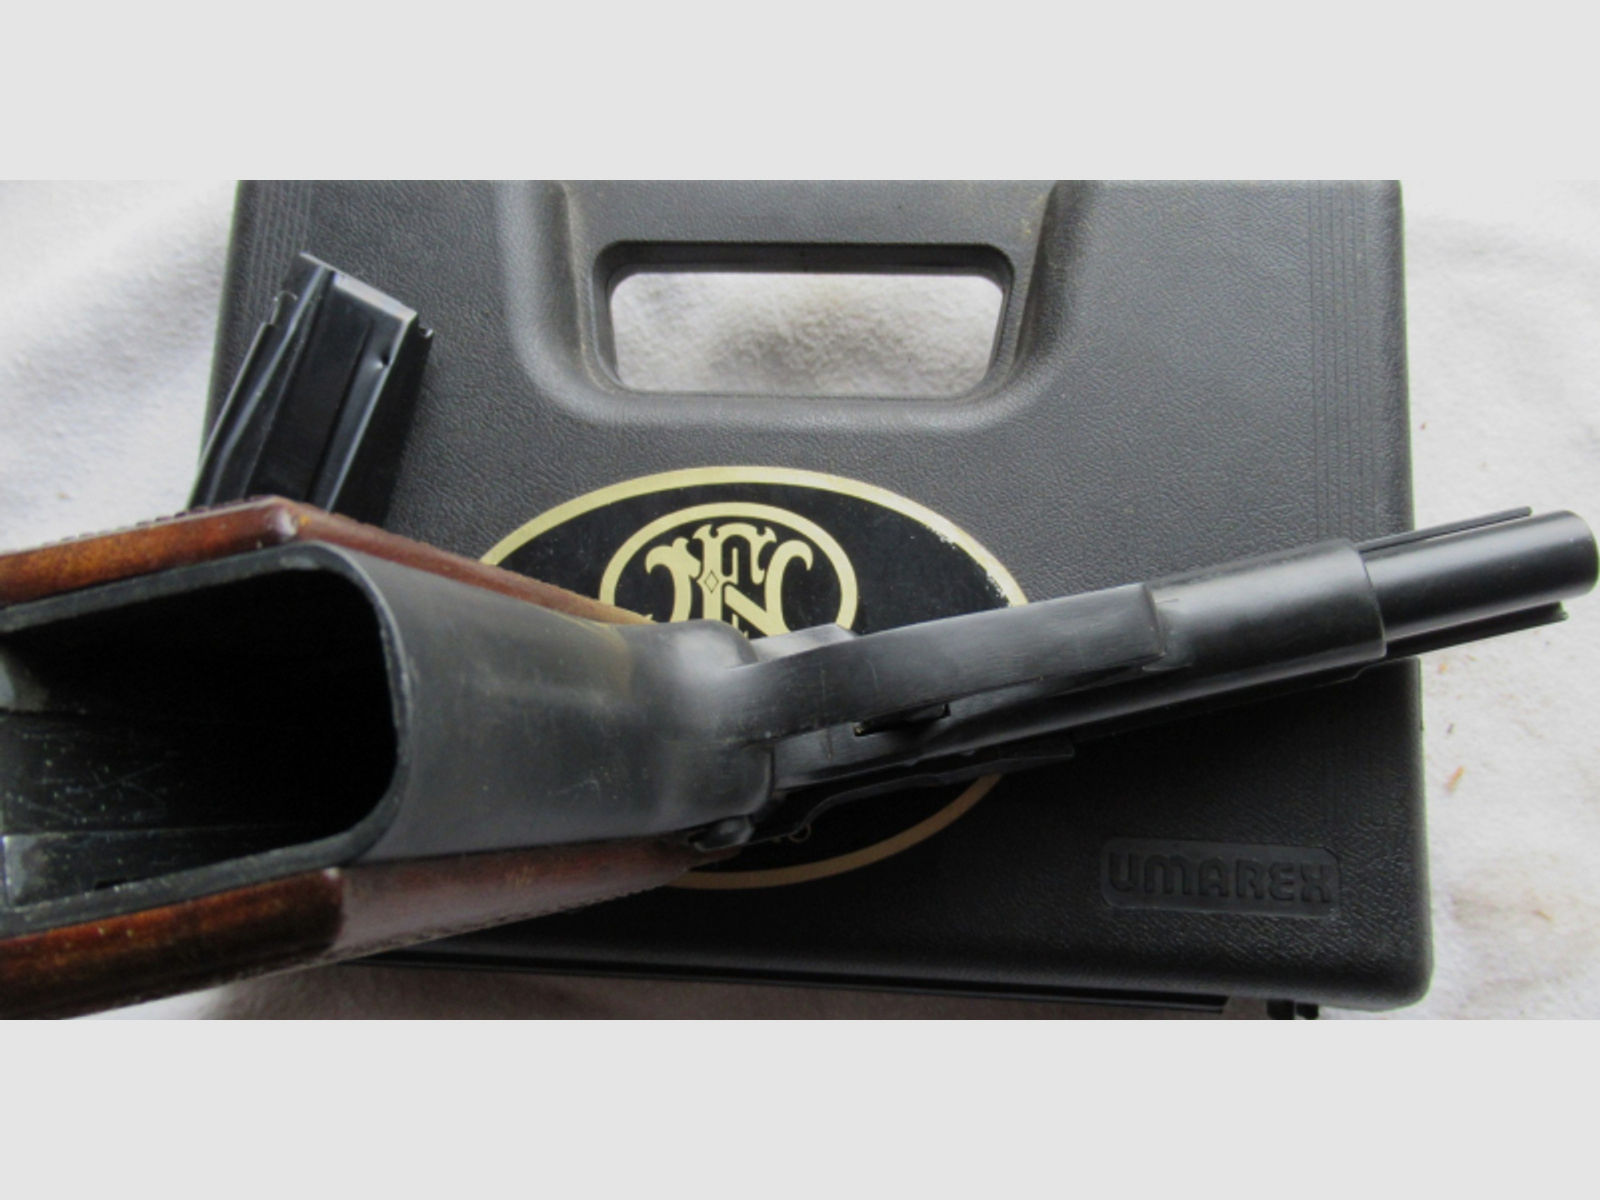 Pistole 8mm Browning GP DA 8 PTB 389/2